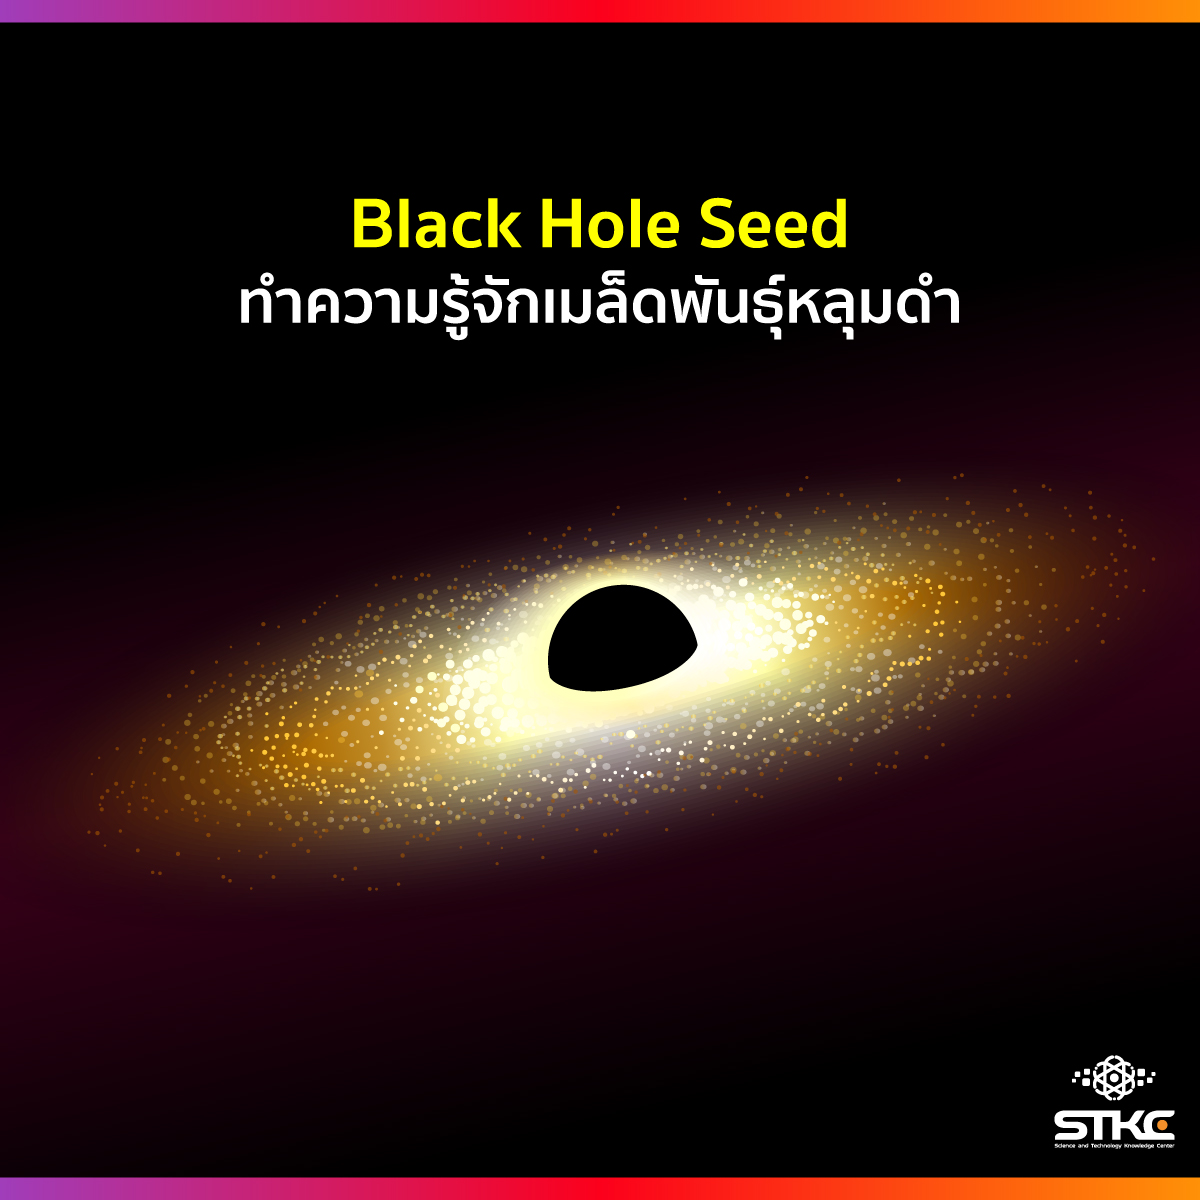 Black Hole Seed ทำความรู้จักเมล็ดพันธุ์หลุมดำ